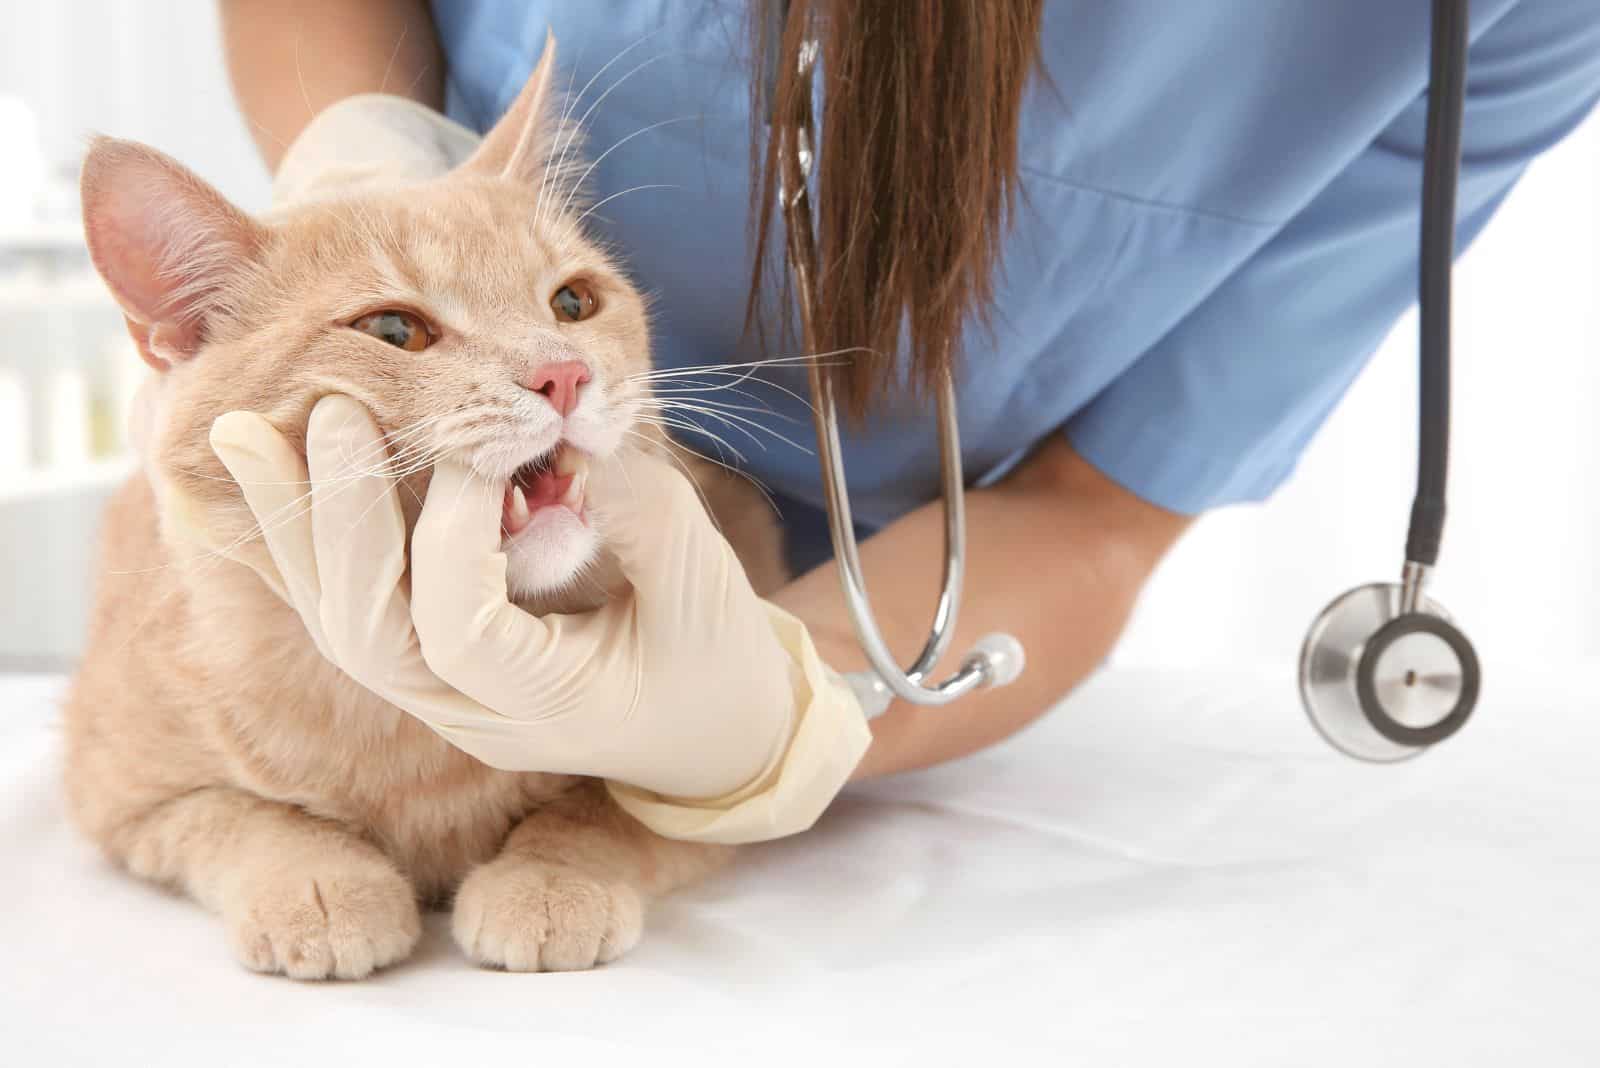 the veterinarian examines the yellow cat